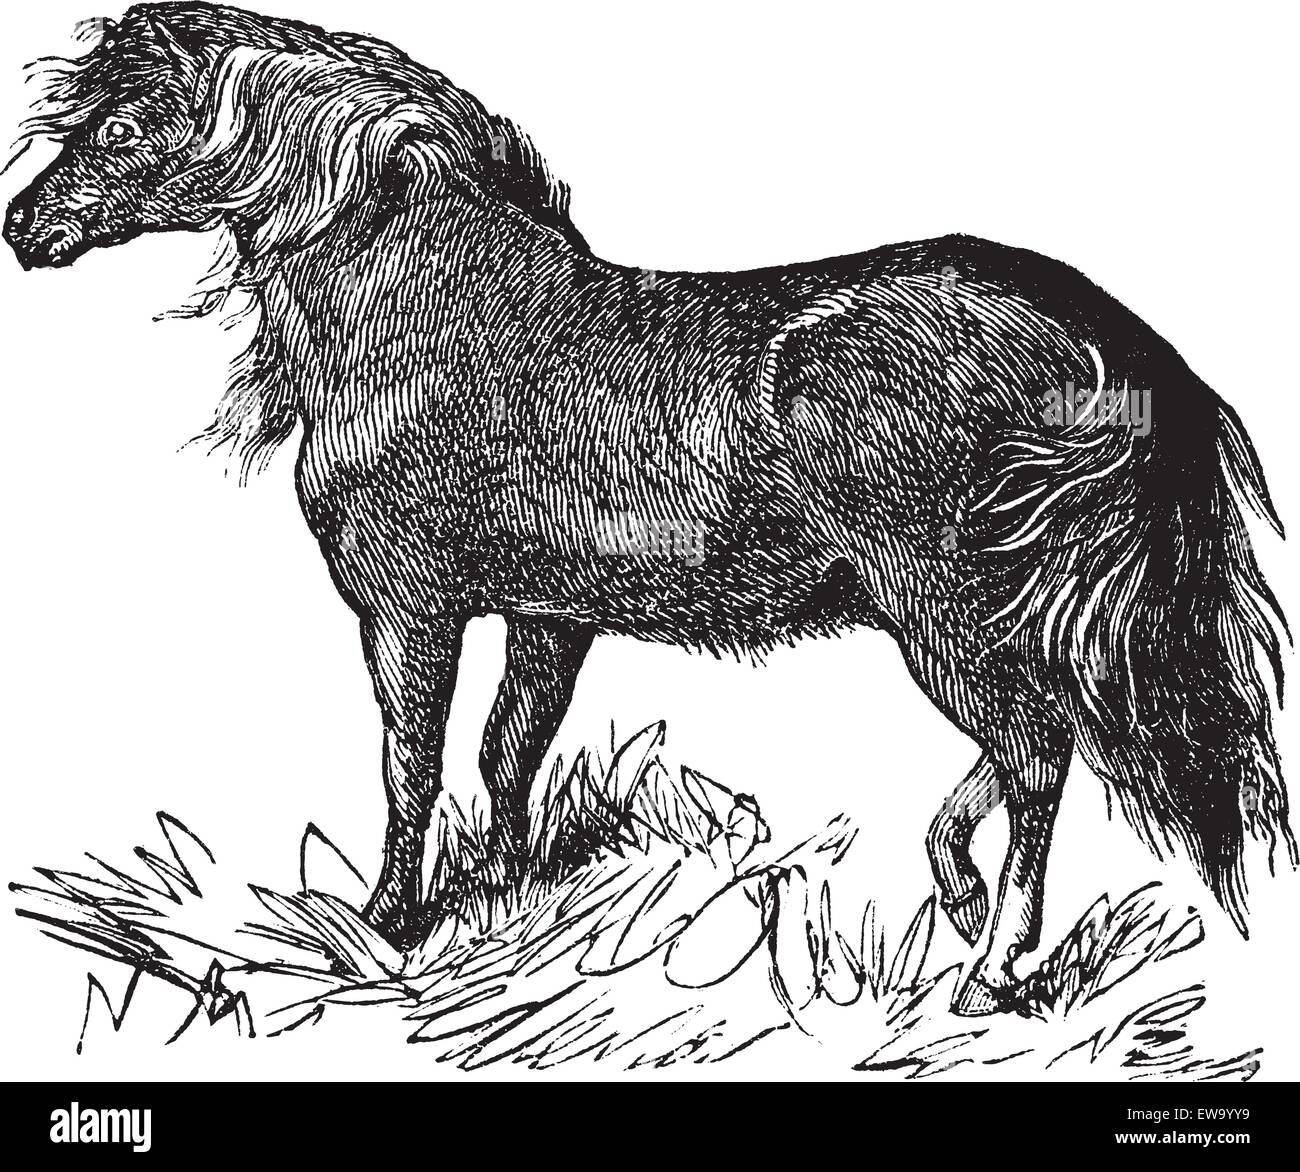 Shetland-Pony oder Equus Ferus Caballus, Vintage-Gravur. Alten gravierte Darstellung eines Shetland-Ponys. Stock Vektor